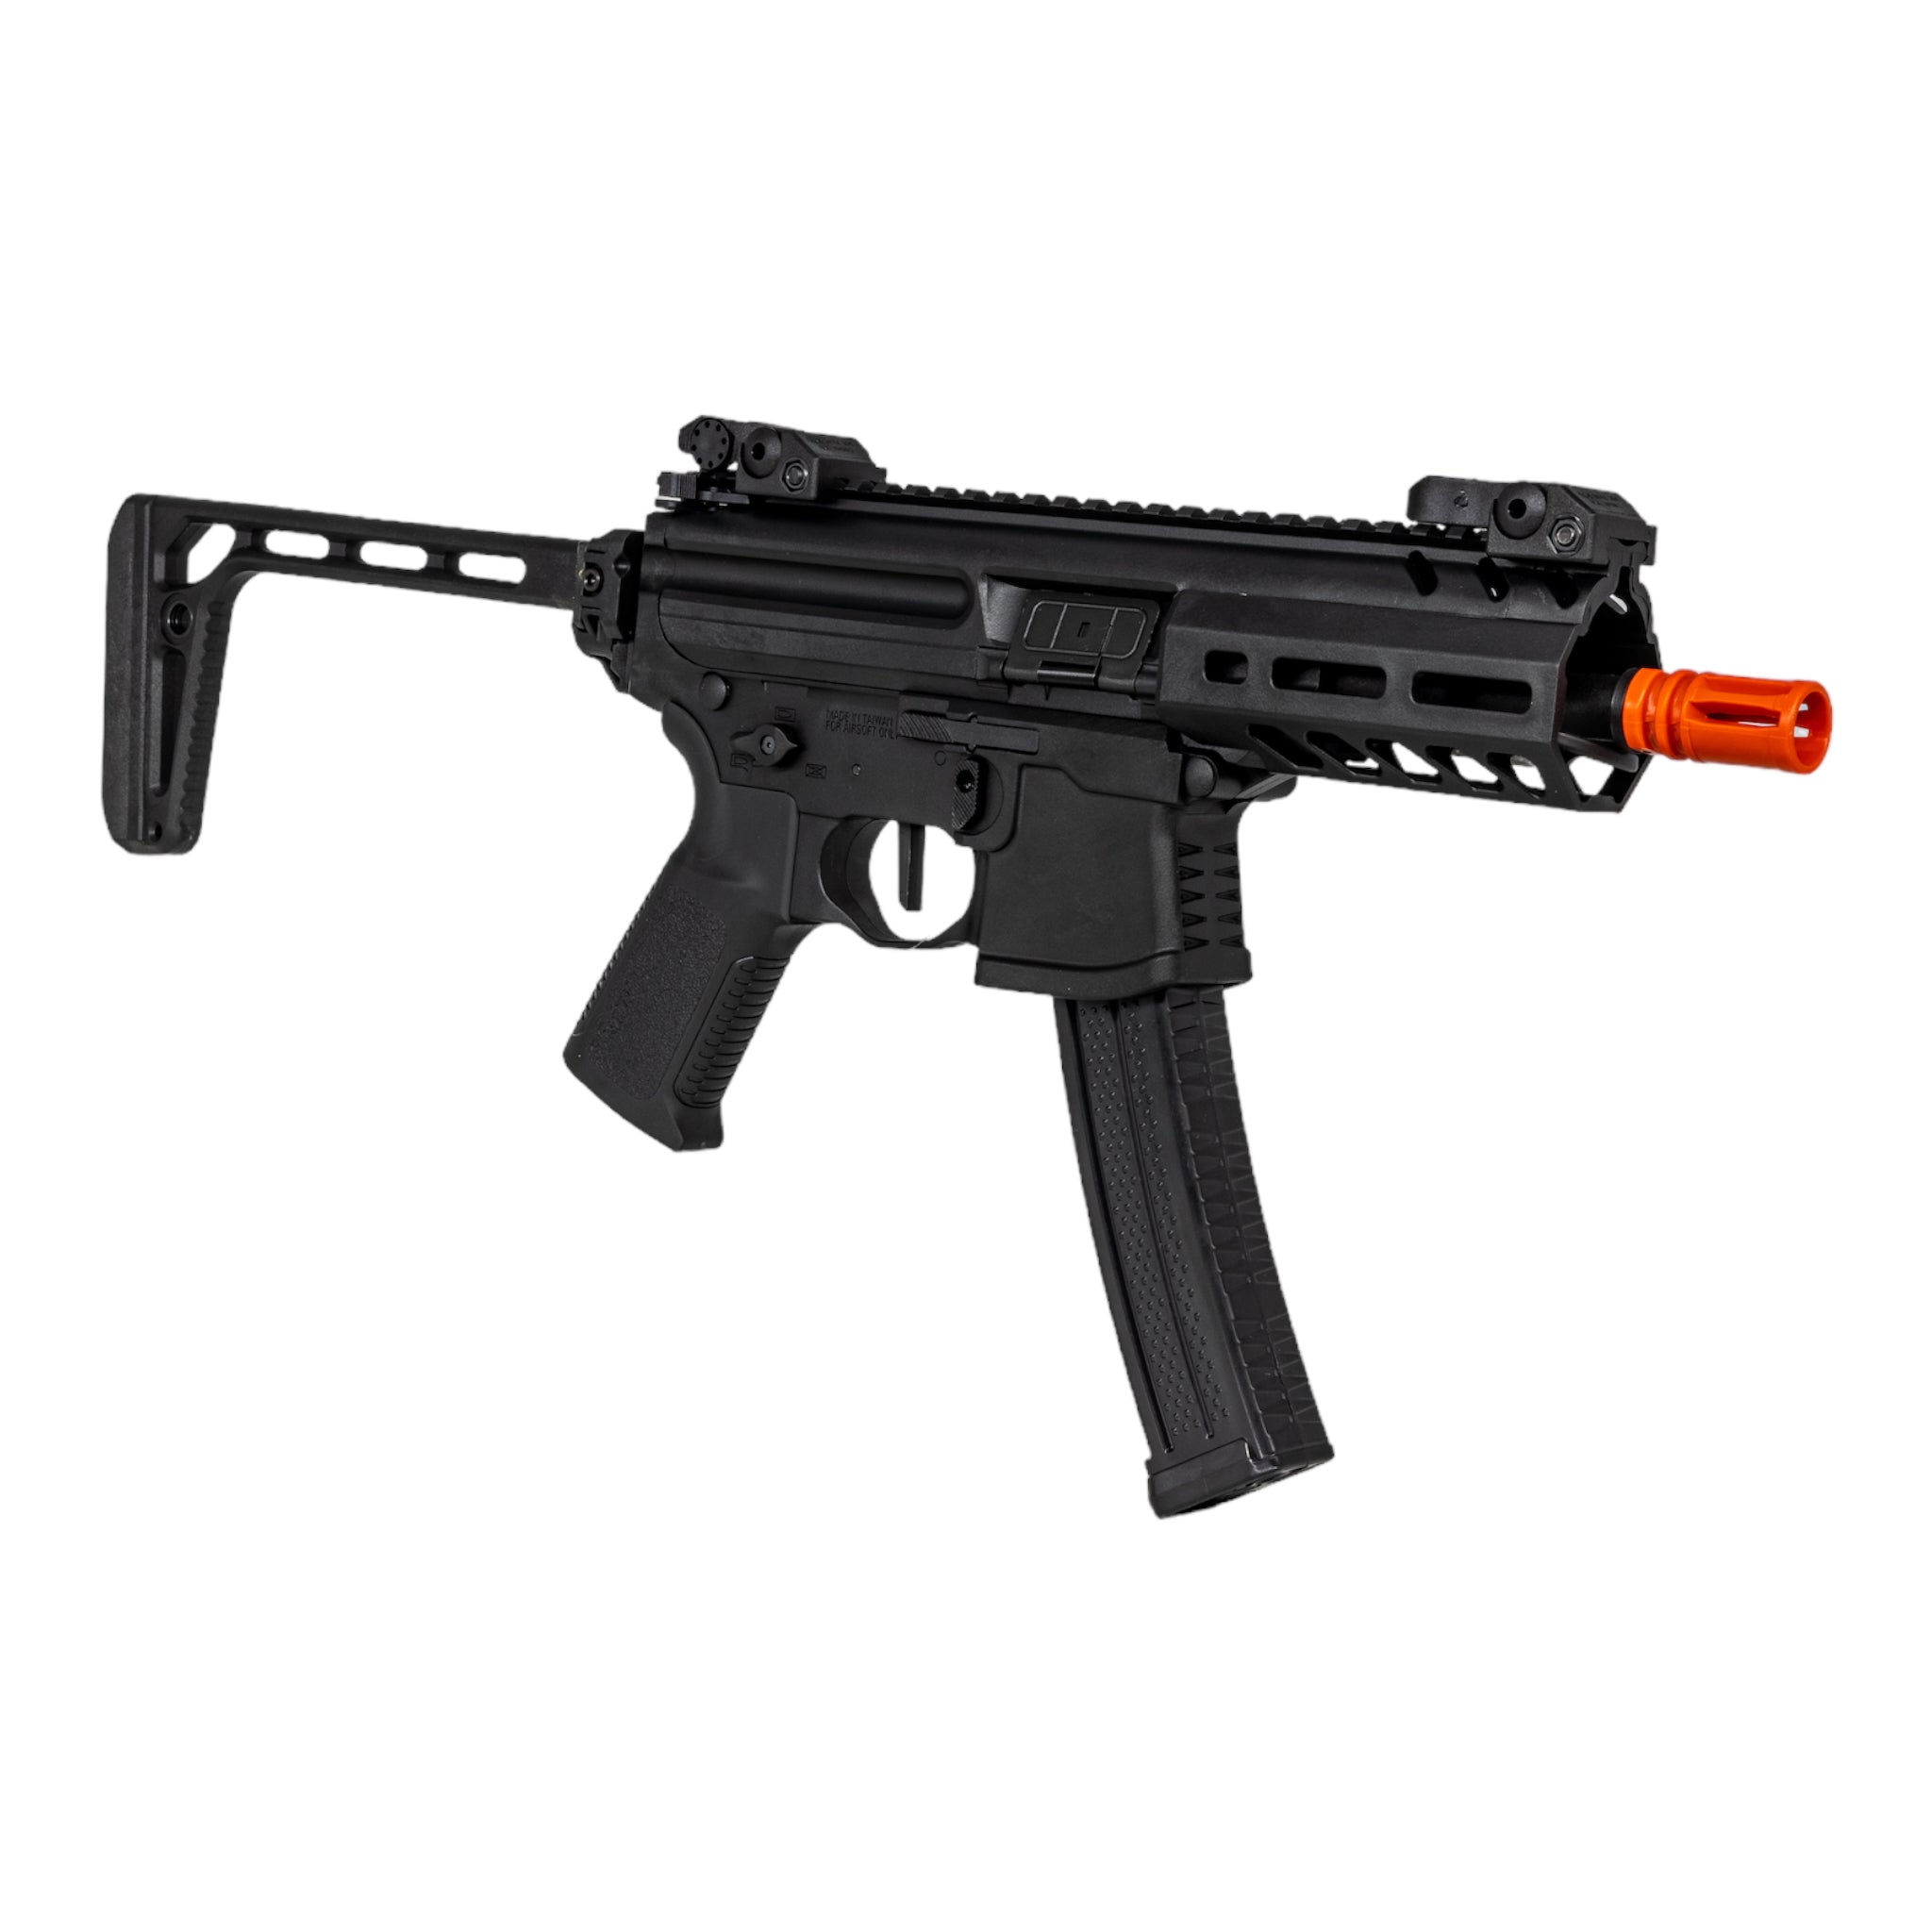 SIG Sauer ProForce Sportline MPX-K Airsoft AEG Rifle - ssairsoft.com